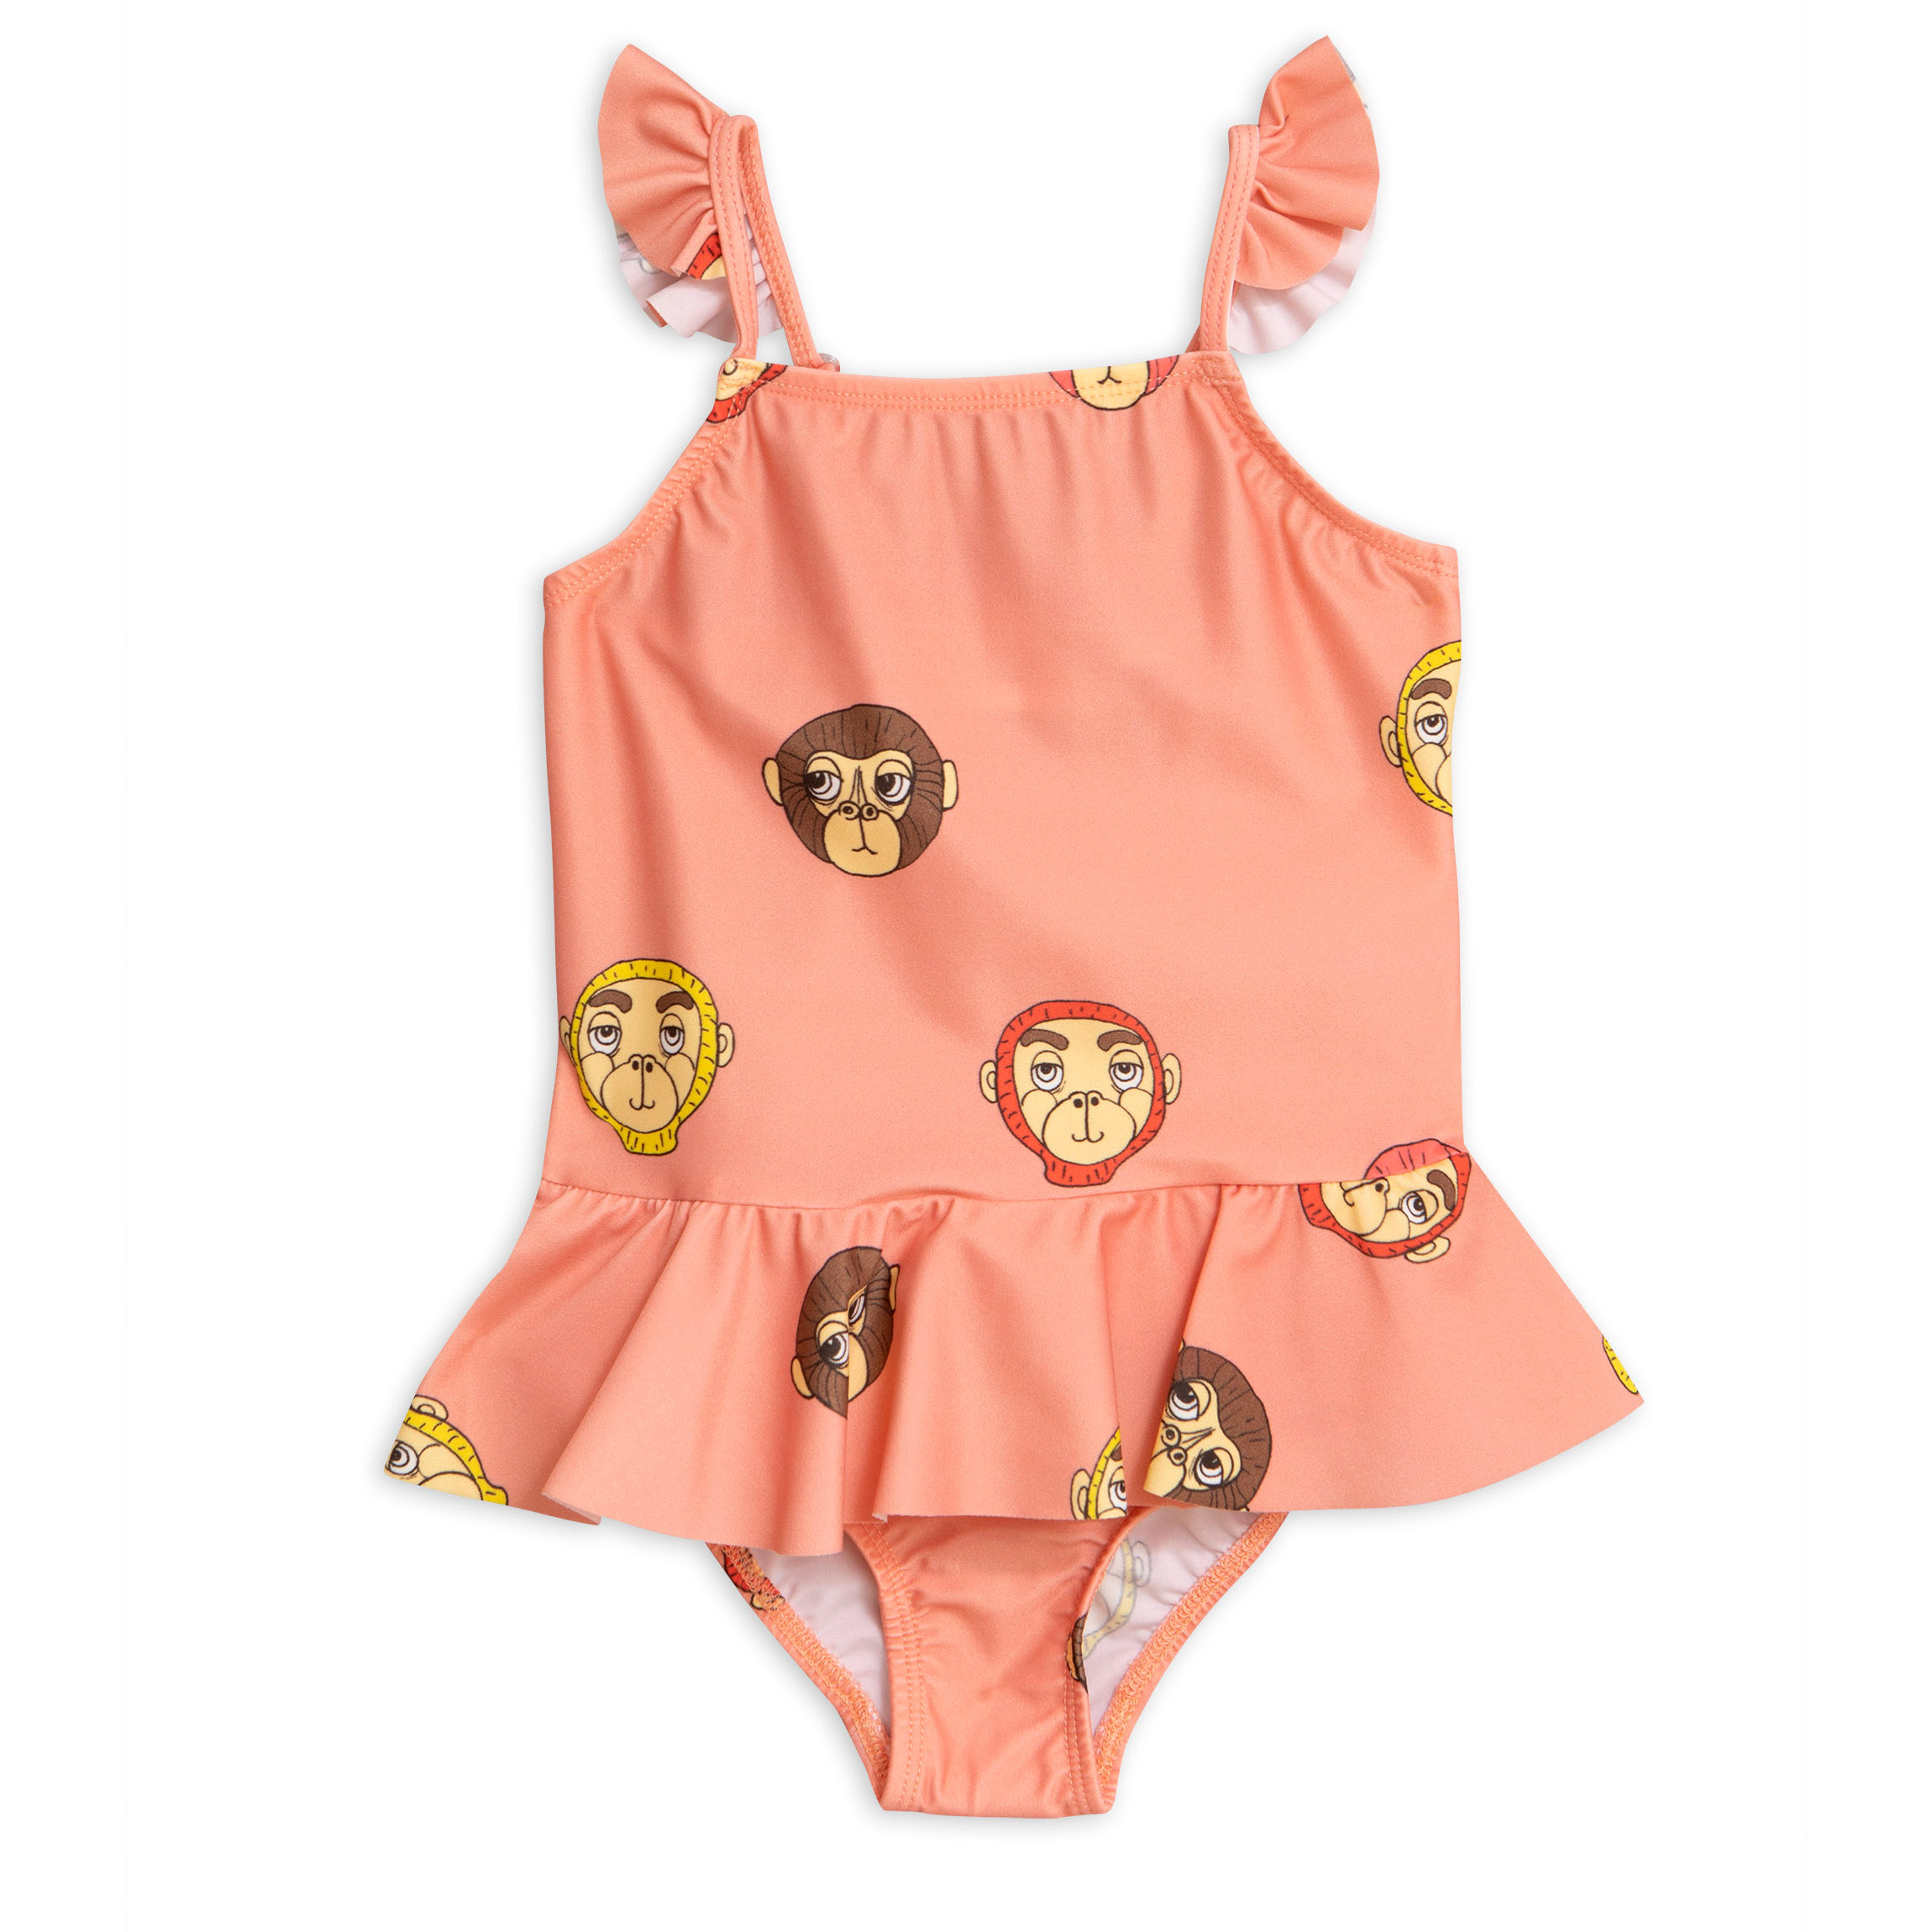 Mini Rodini SS19 Monkey Skirt Swimsuit Pink - Leo & Bella